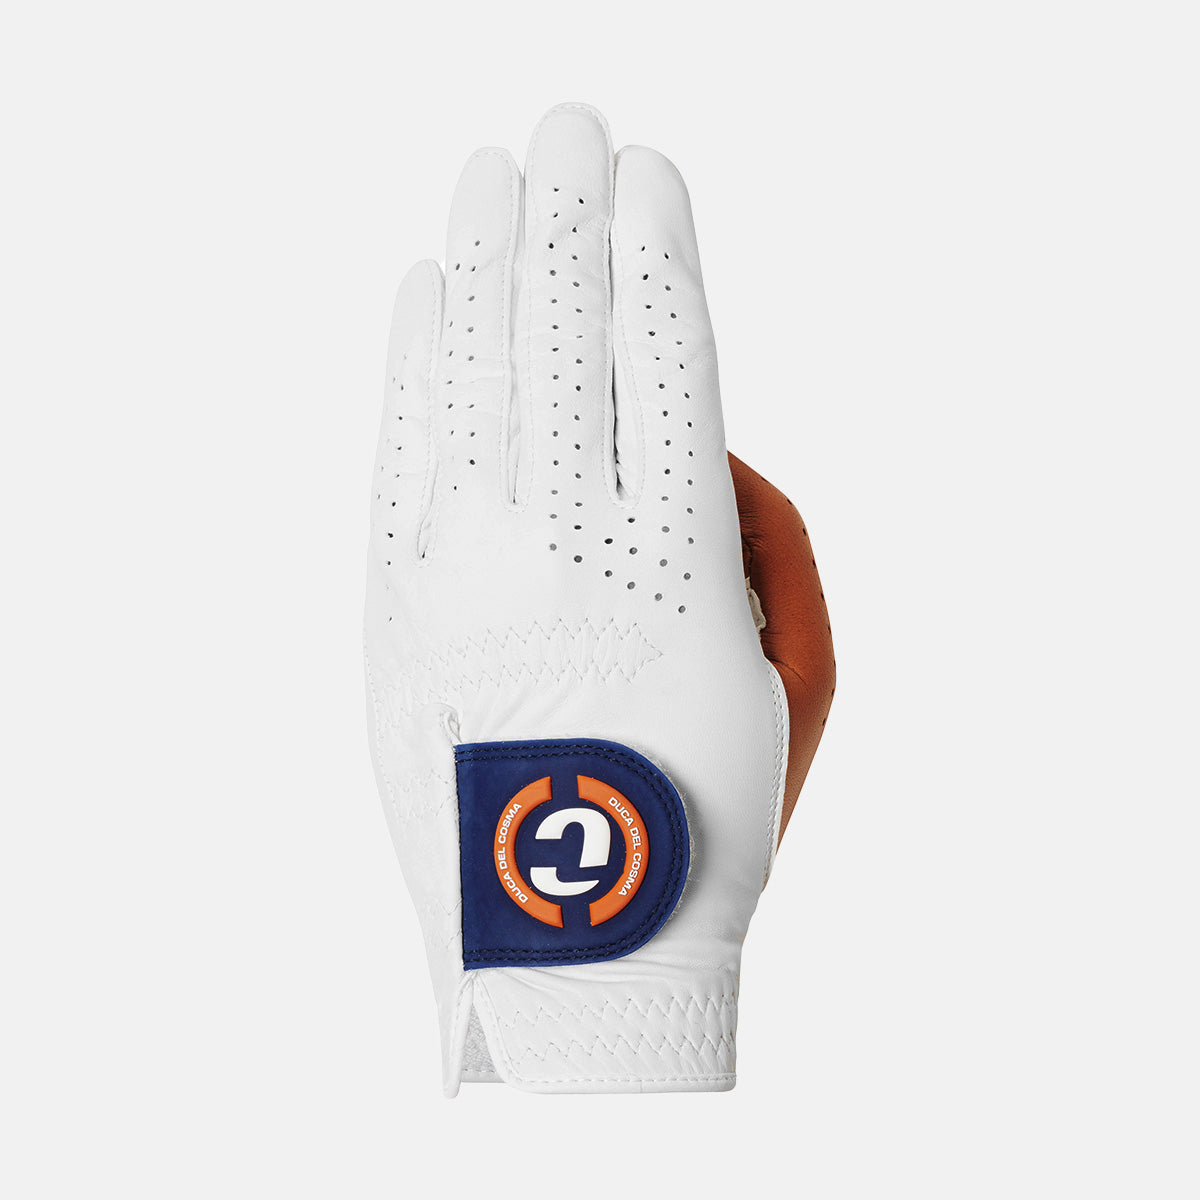 Men's Golf Glove Elite Pro Laguna White/Cognac Left